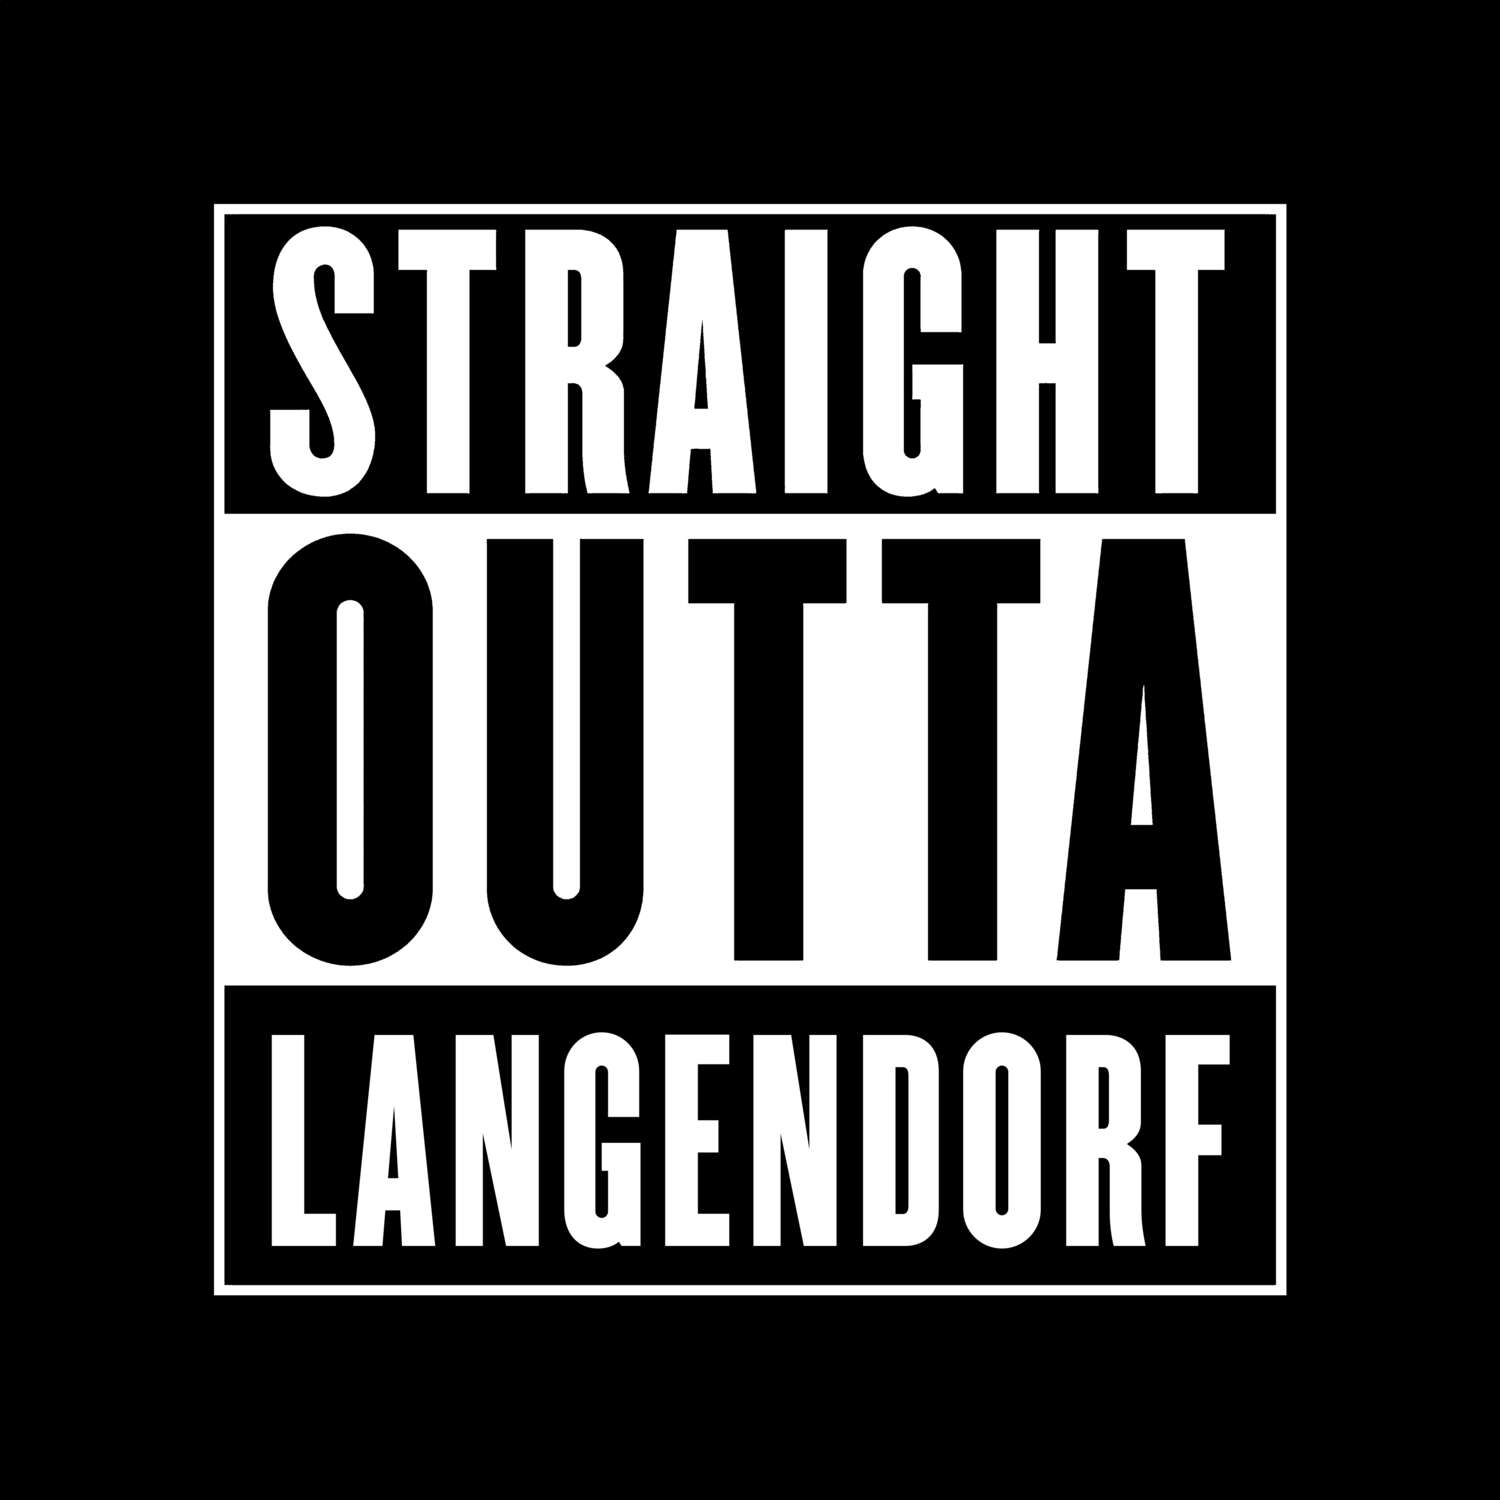 Langendorf T-Shirt »Straight Outta«